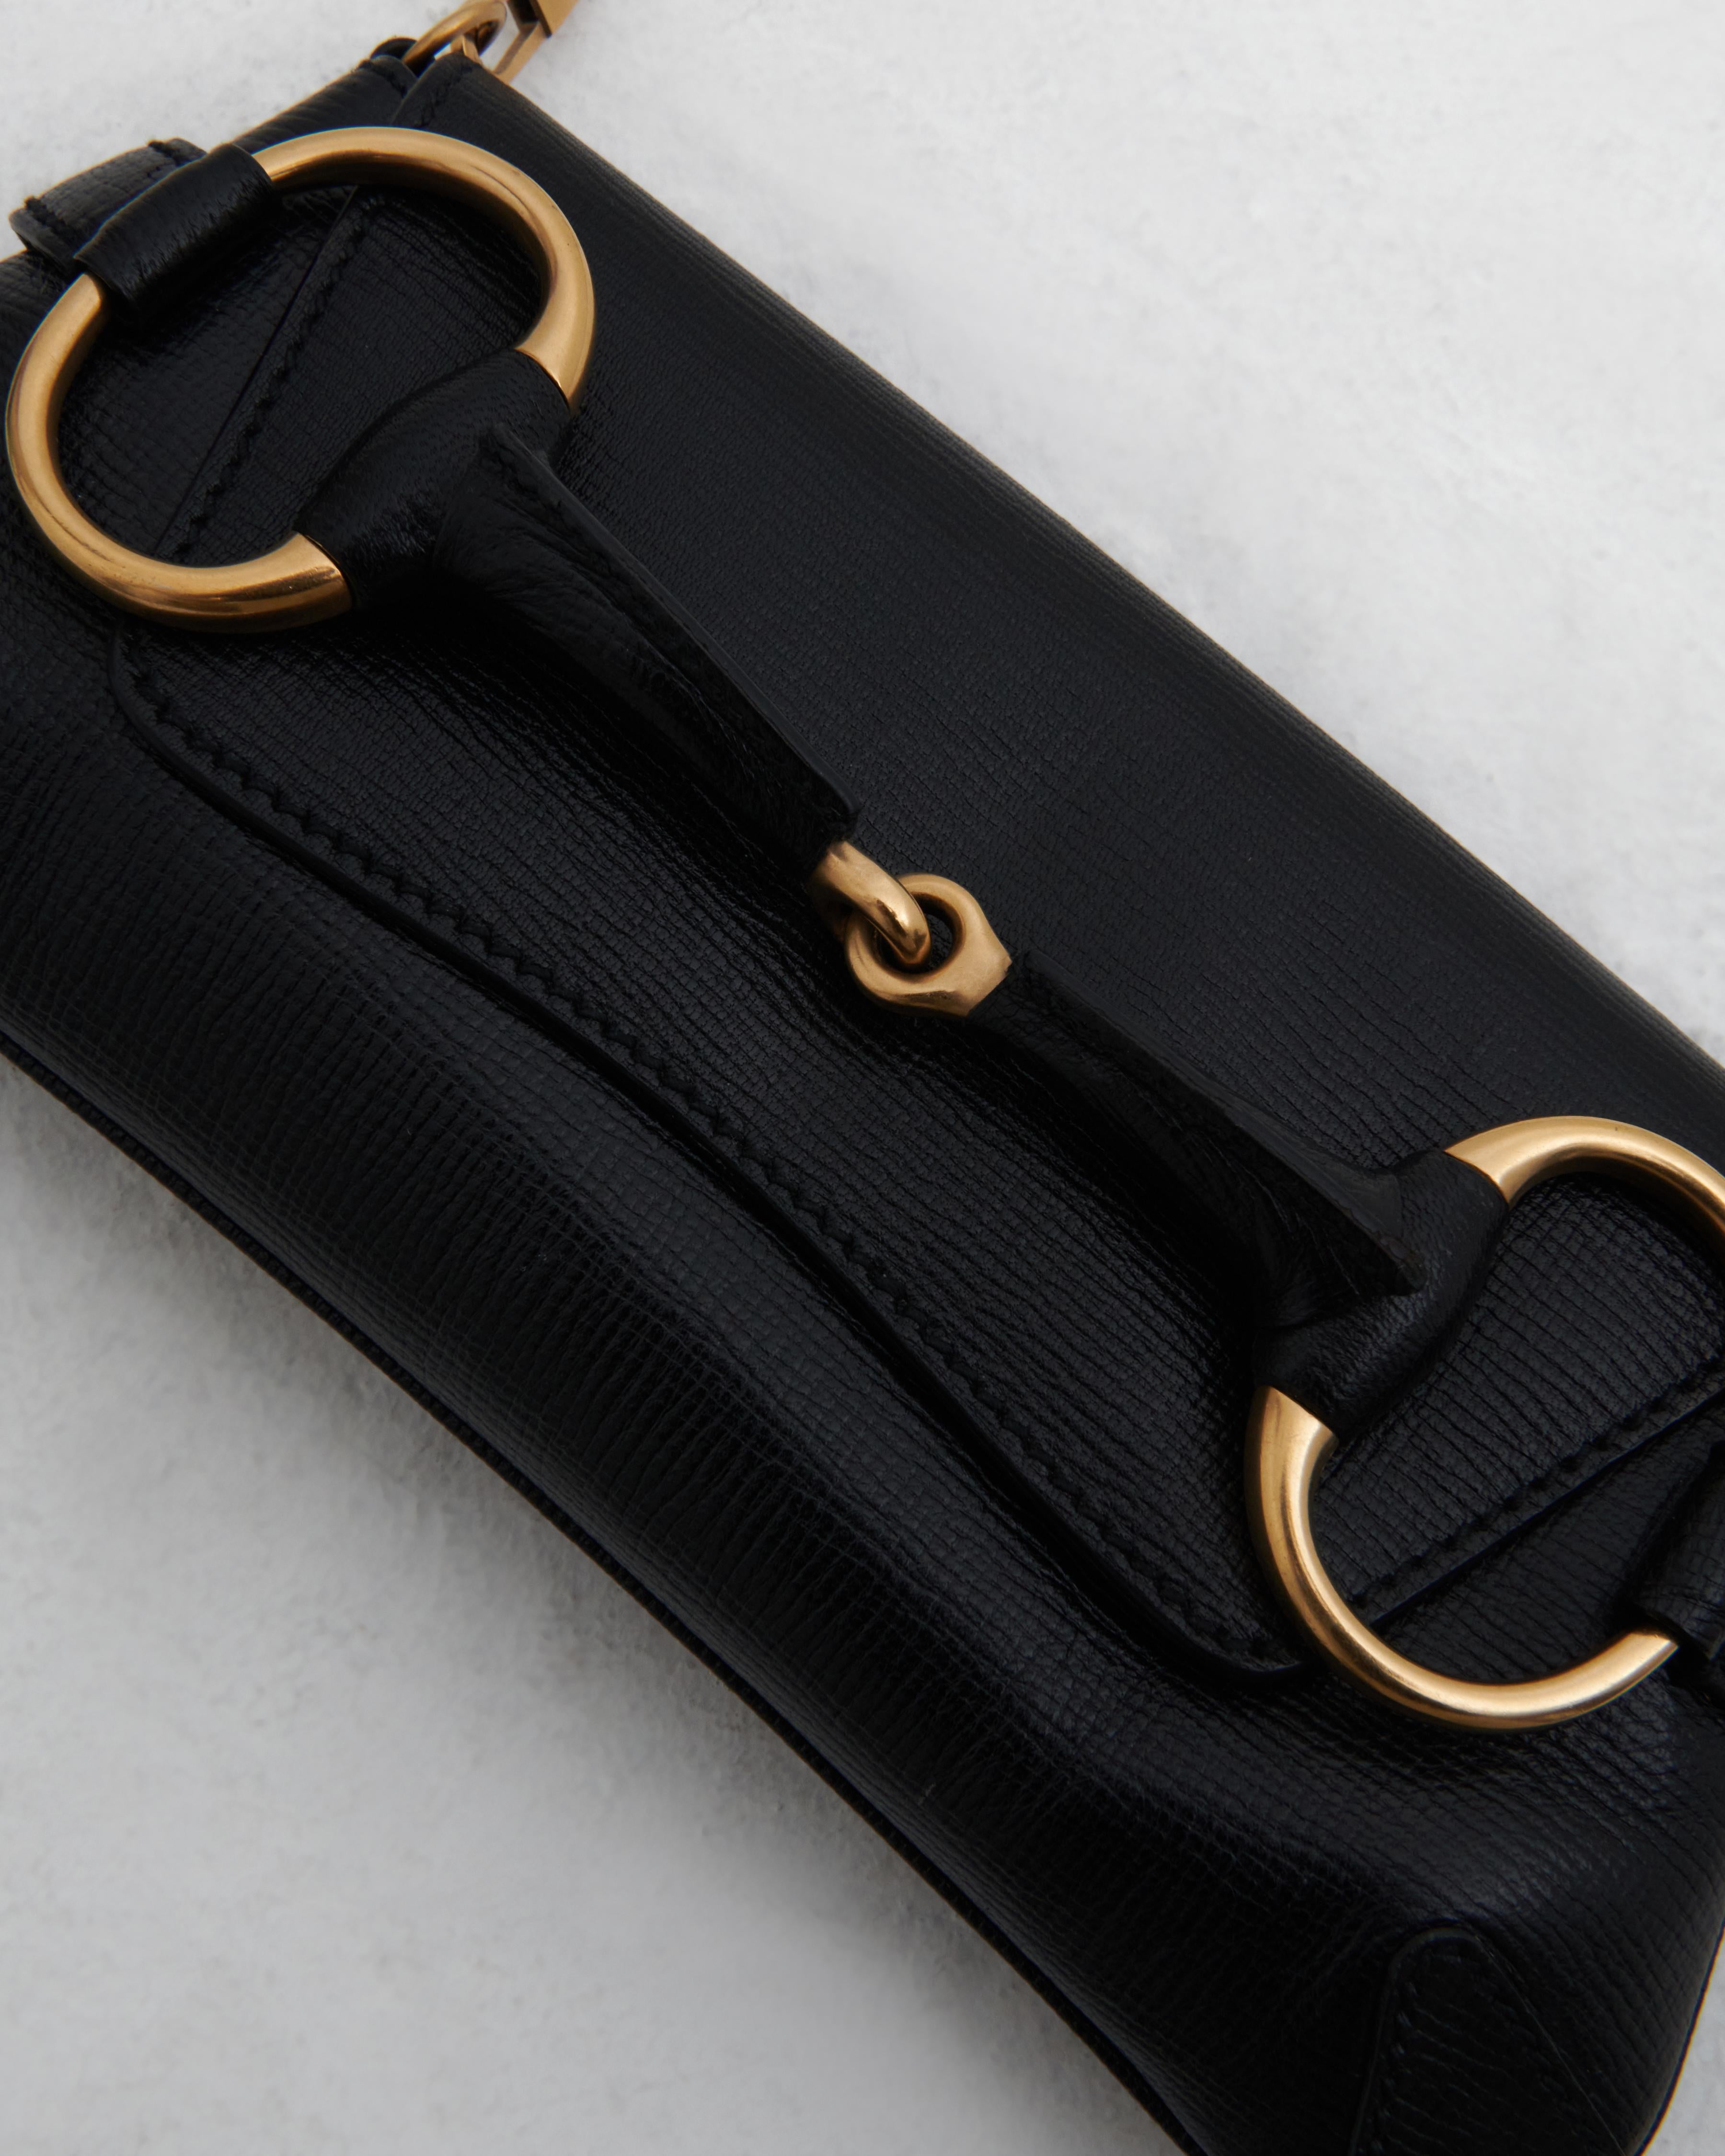 Gucci by Tom Ford F/W 2003 Black leather 'Horsebit' chain clutch  2